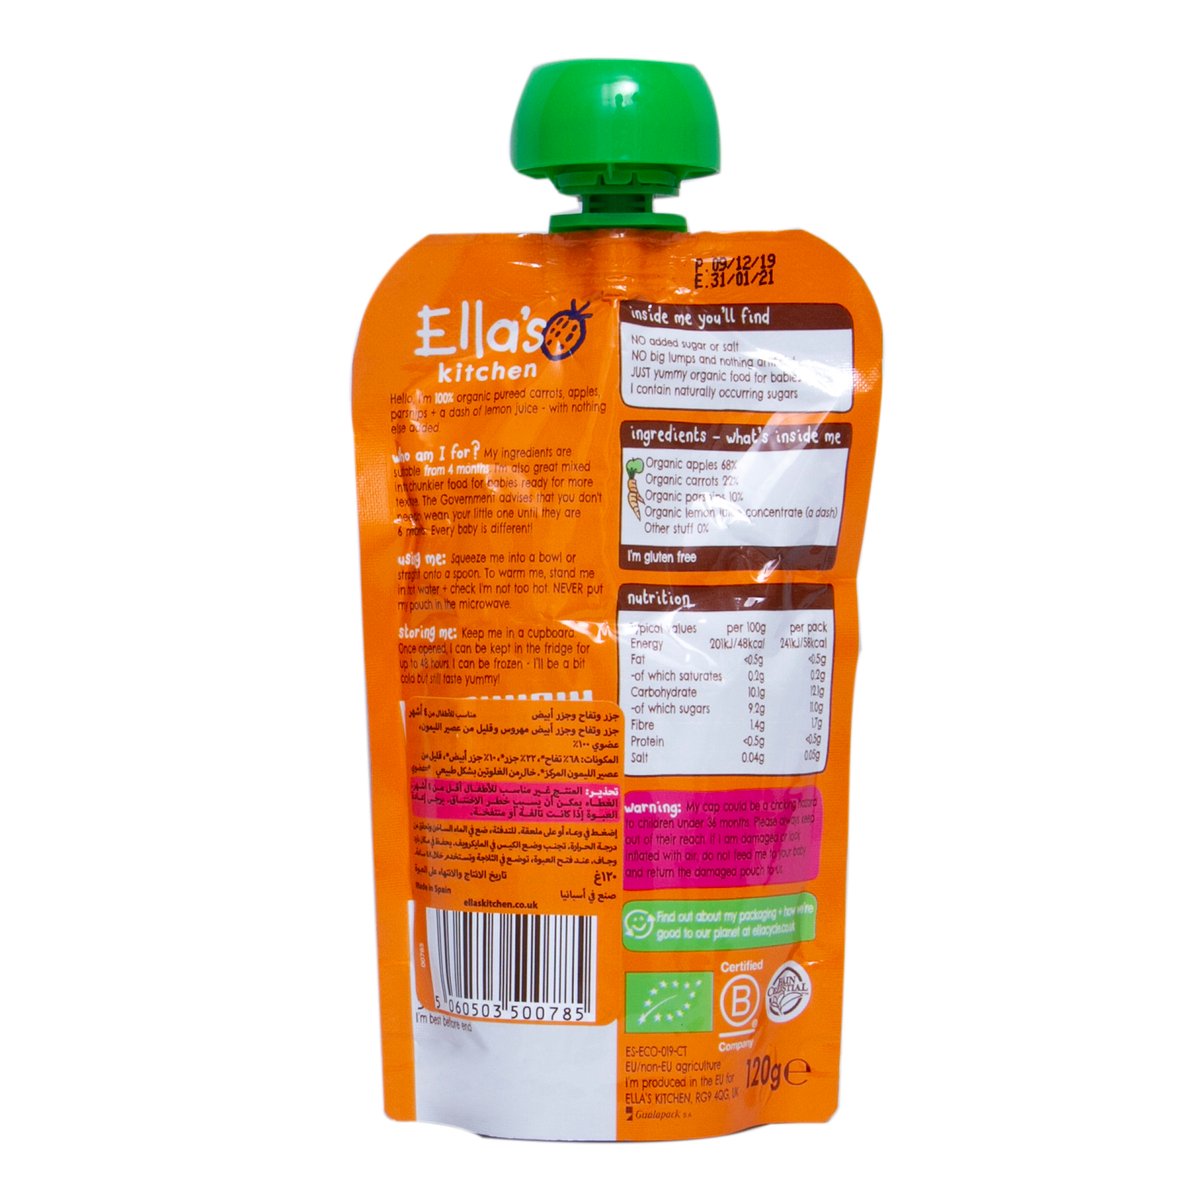 Ella's Kitchen 100% Organic Baby Food Carrot Apples Parsnips 120 g